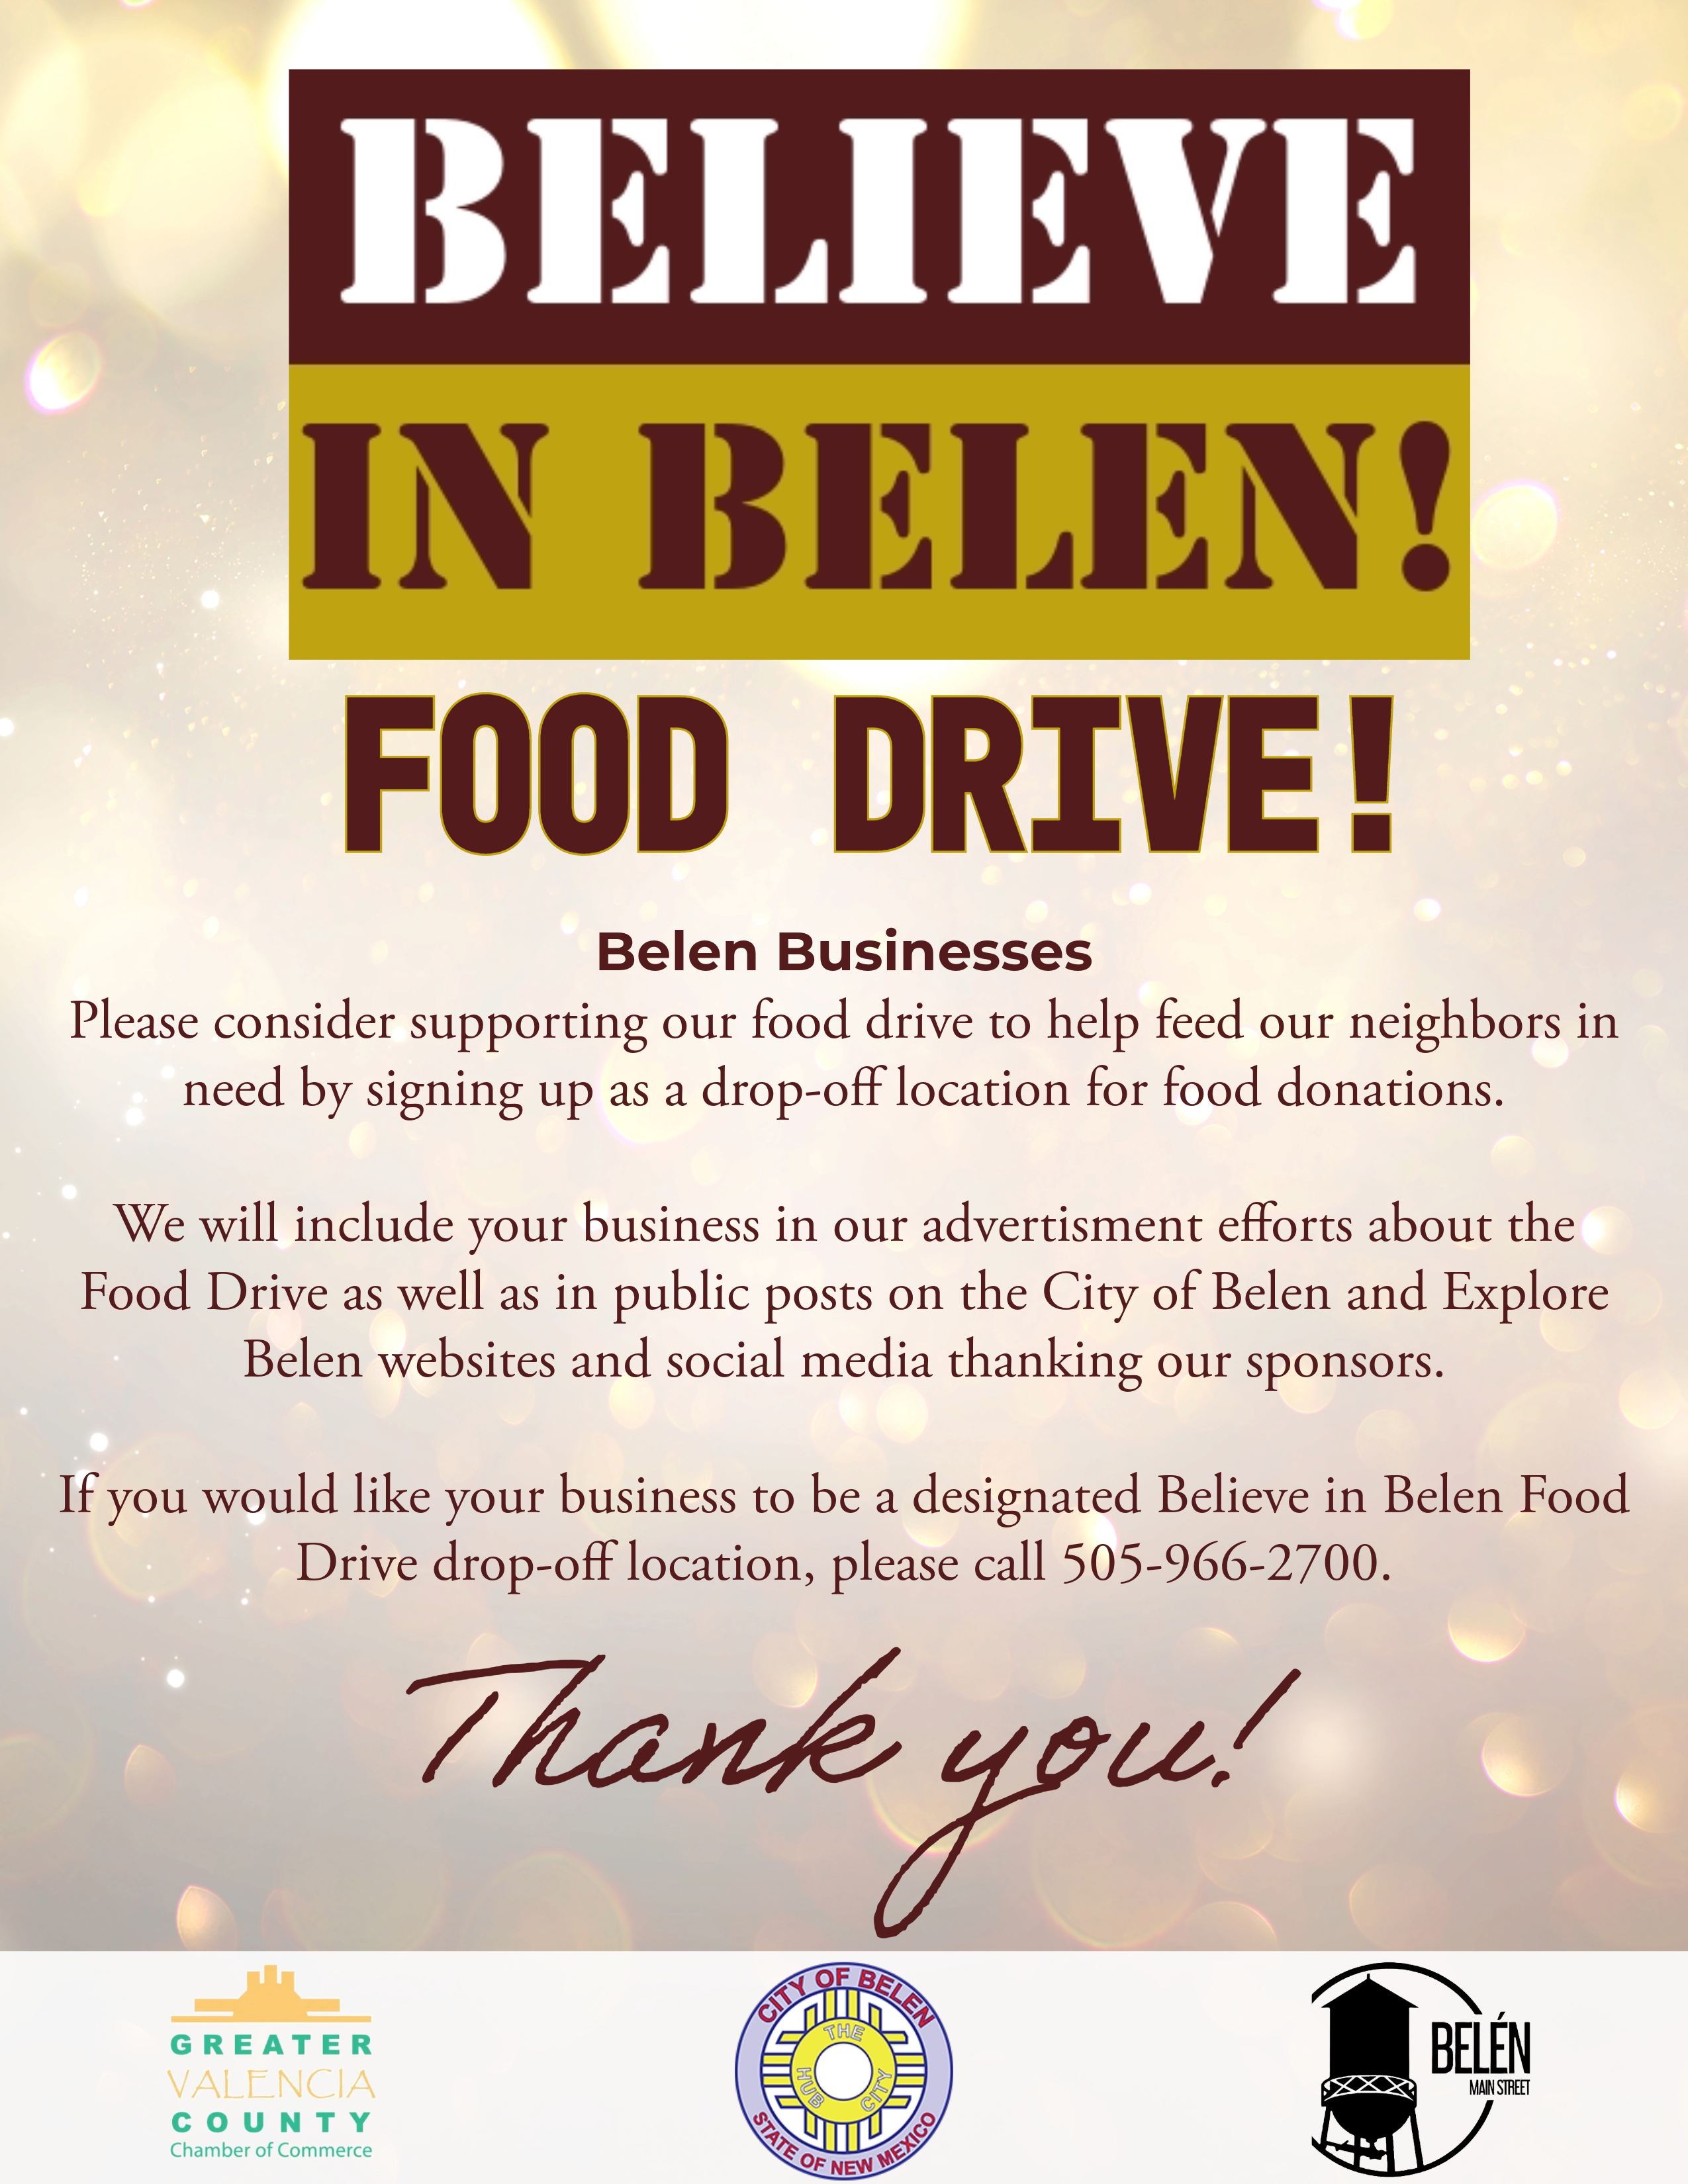 Featured image for “Believe in Belen Food Drive Needs Business Partners”